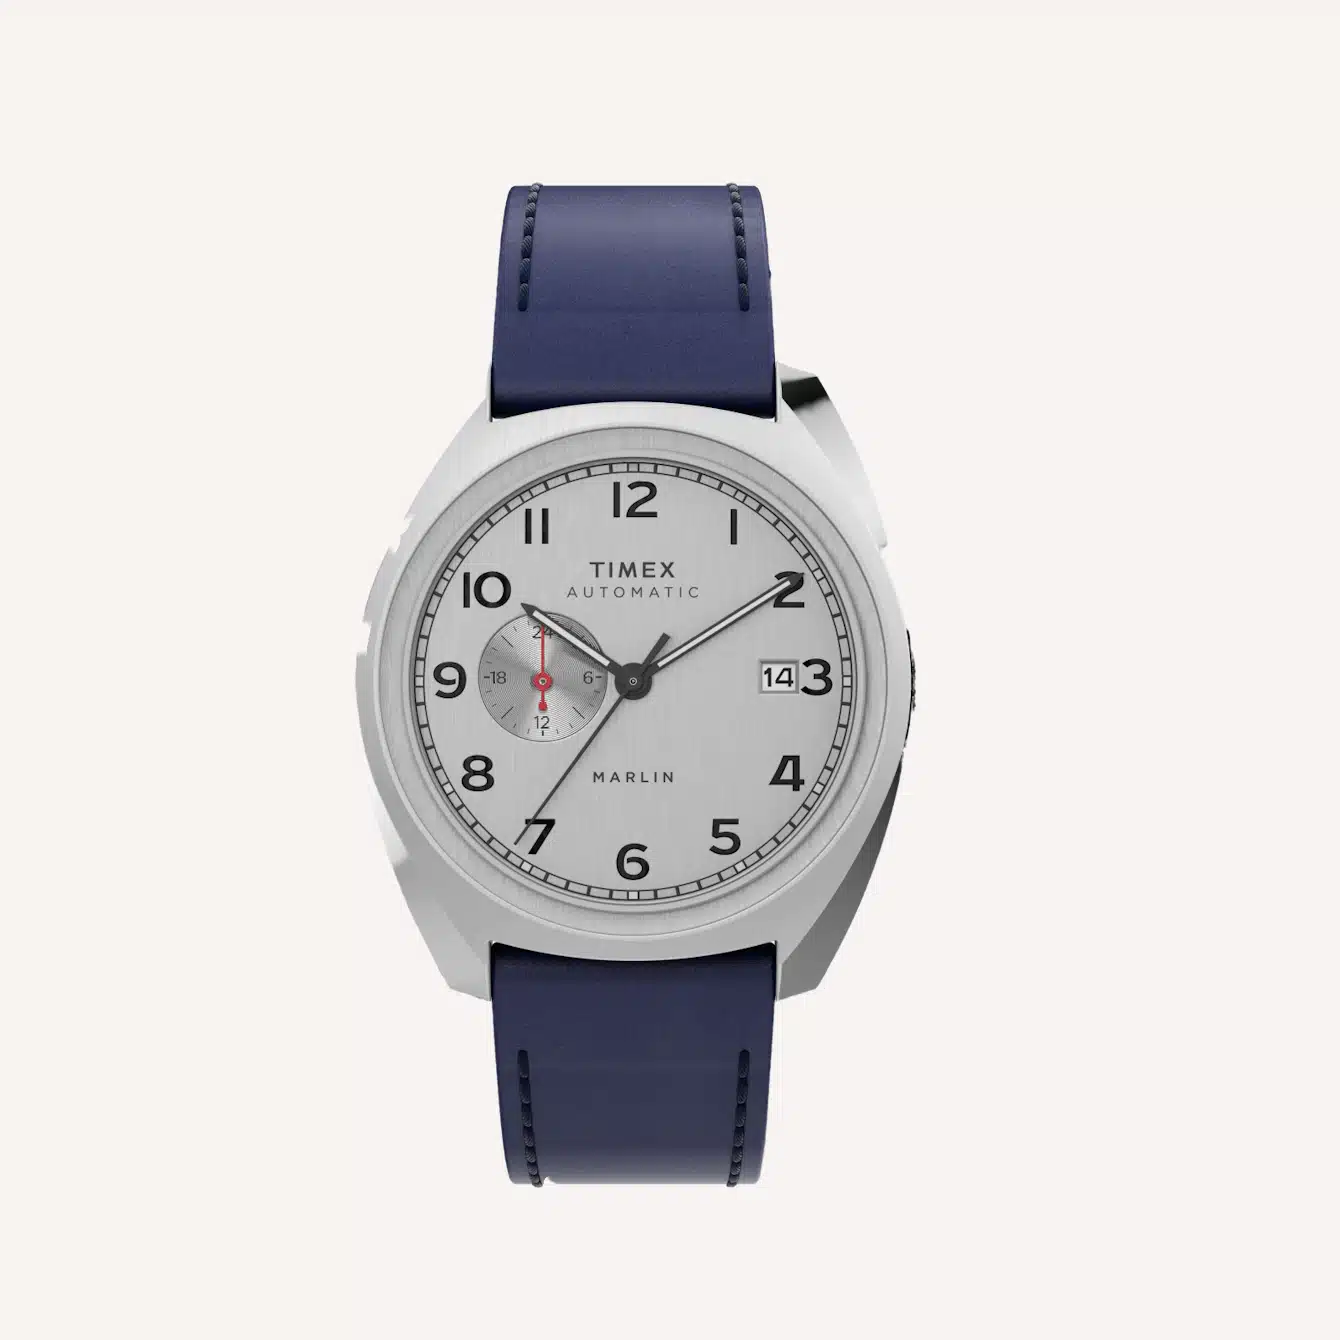 Является ли Timex хорошим брендом?